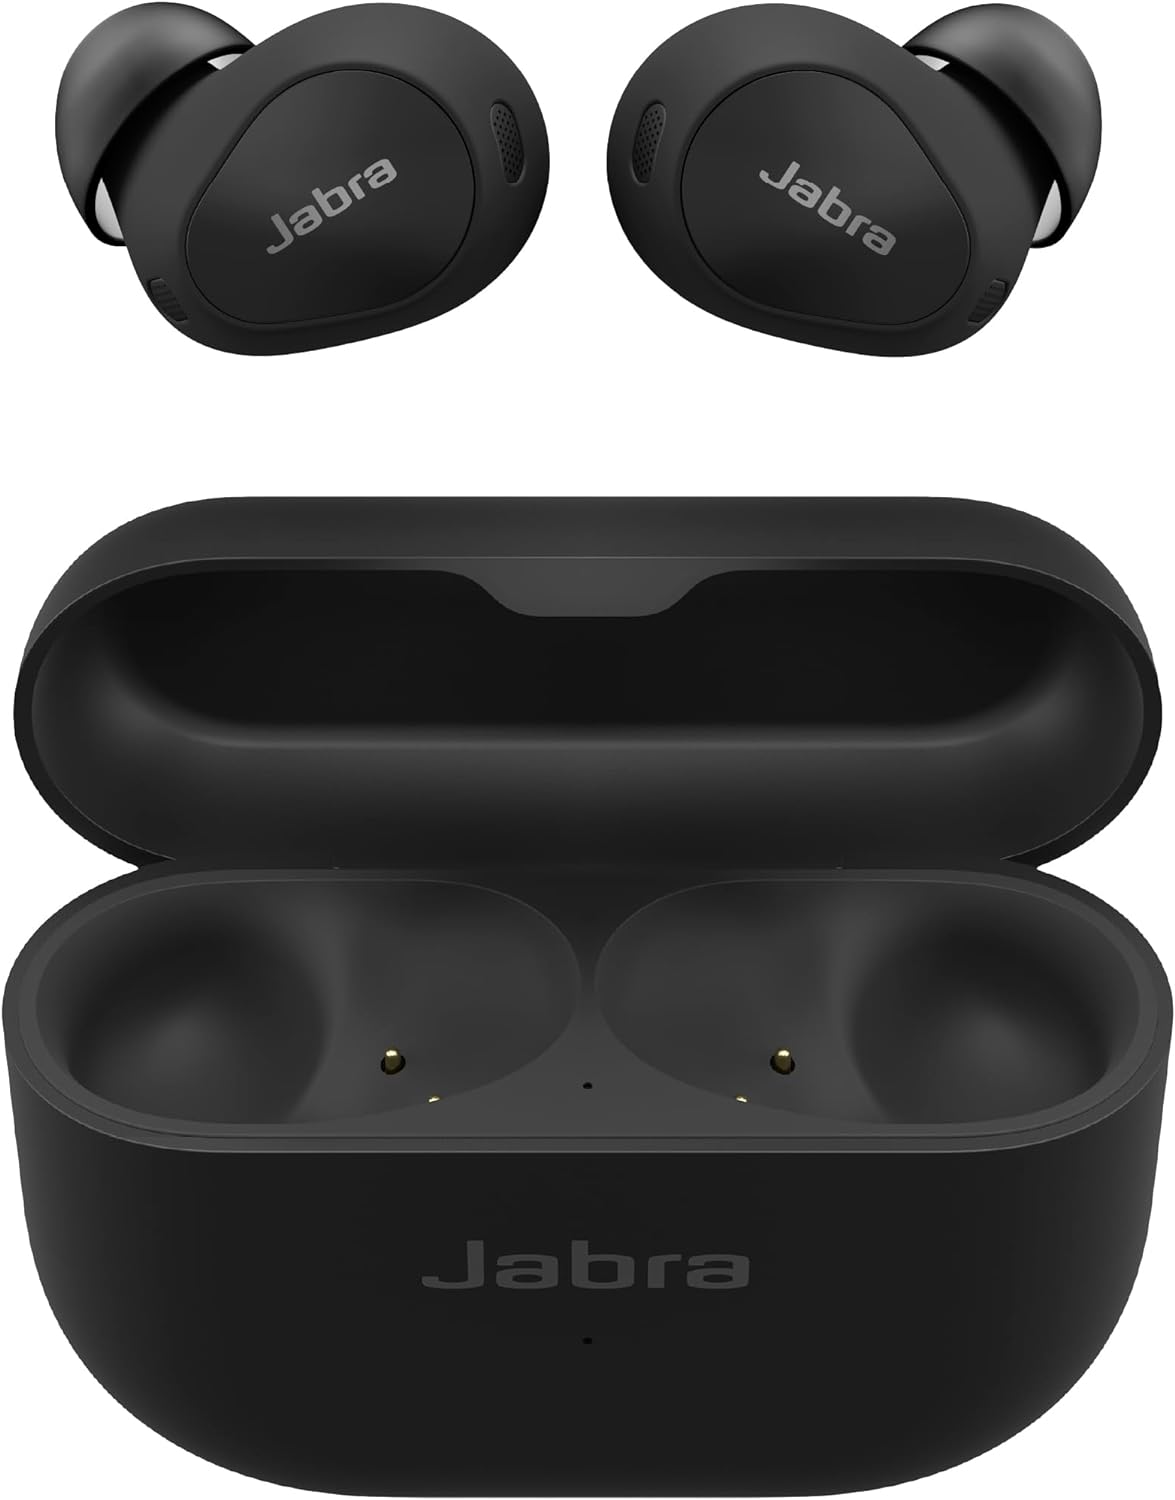 Jabra Elite 10: Save $53 on Amazon!